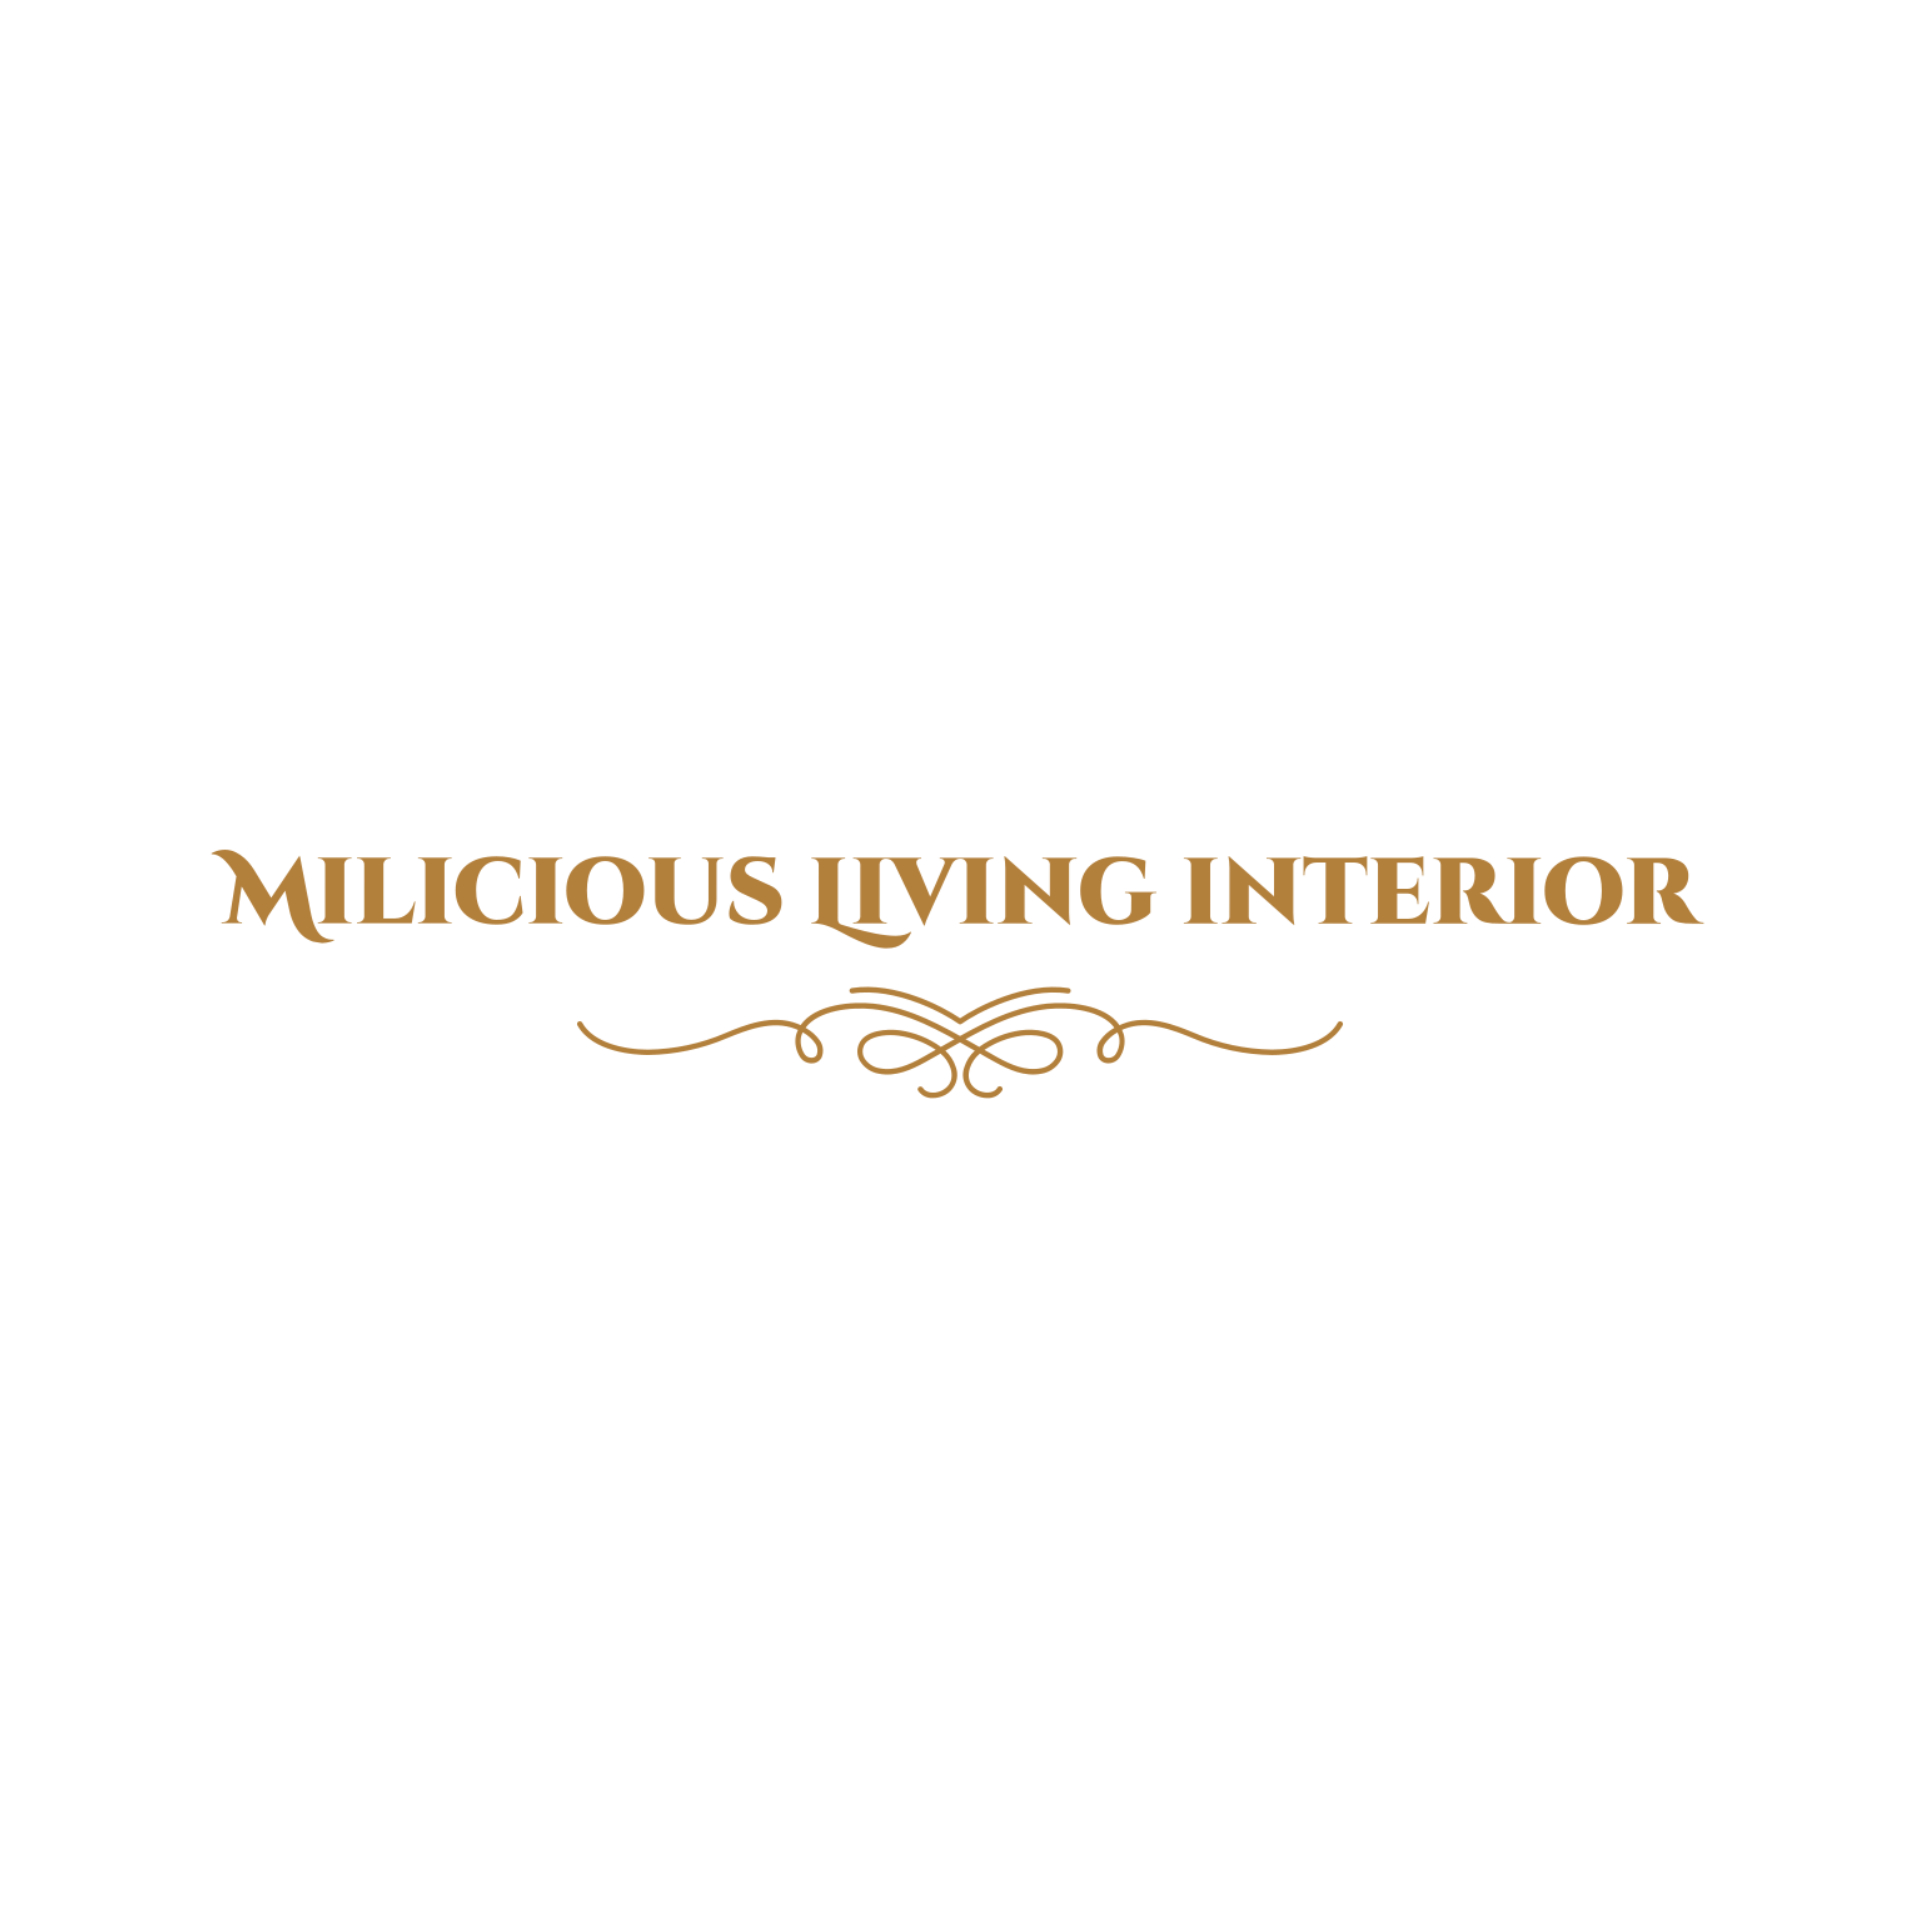 Milicious living interior provider